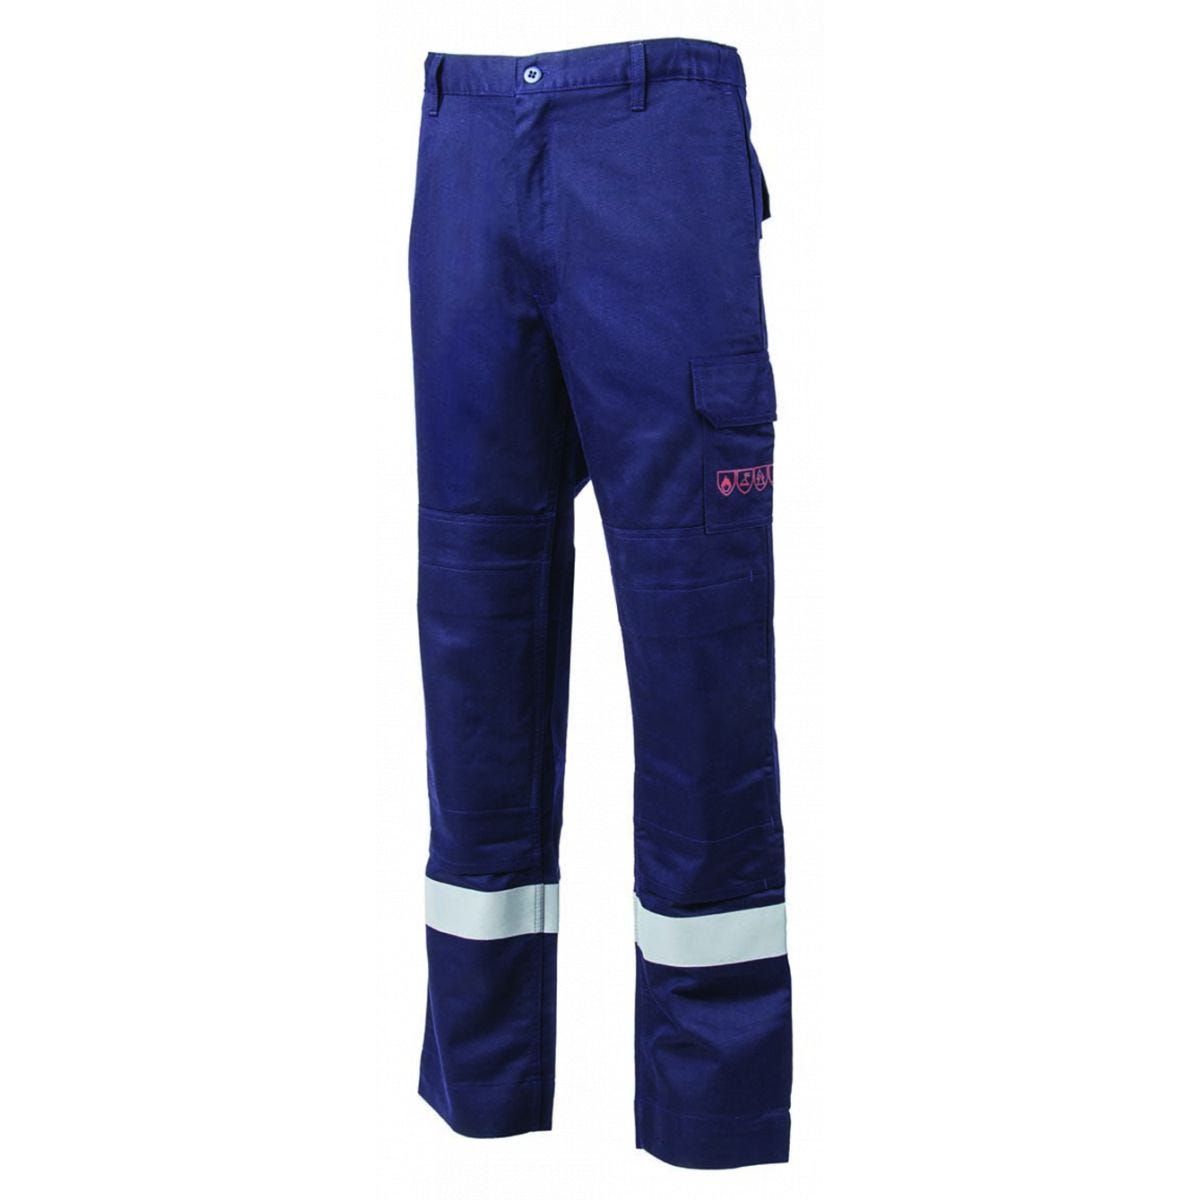 THOR Pantalon multirisques + bandes, 300g/m², Bleu - COVERGUARD - Taille L 0